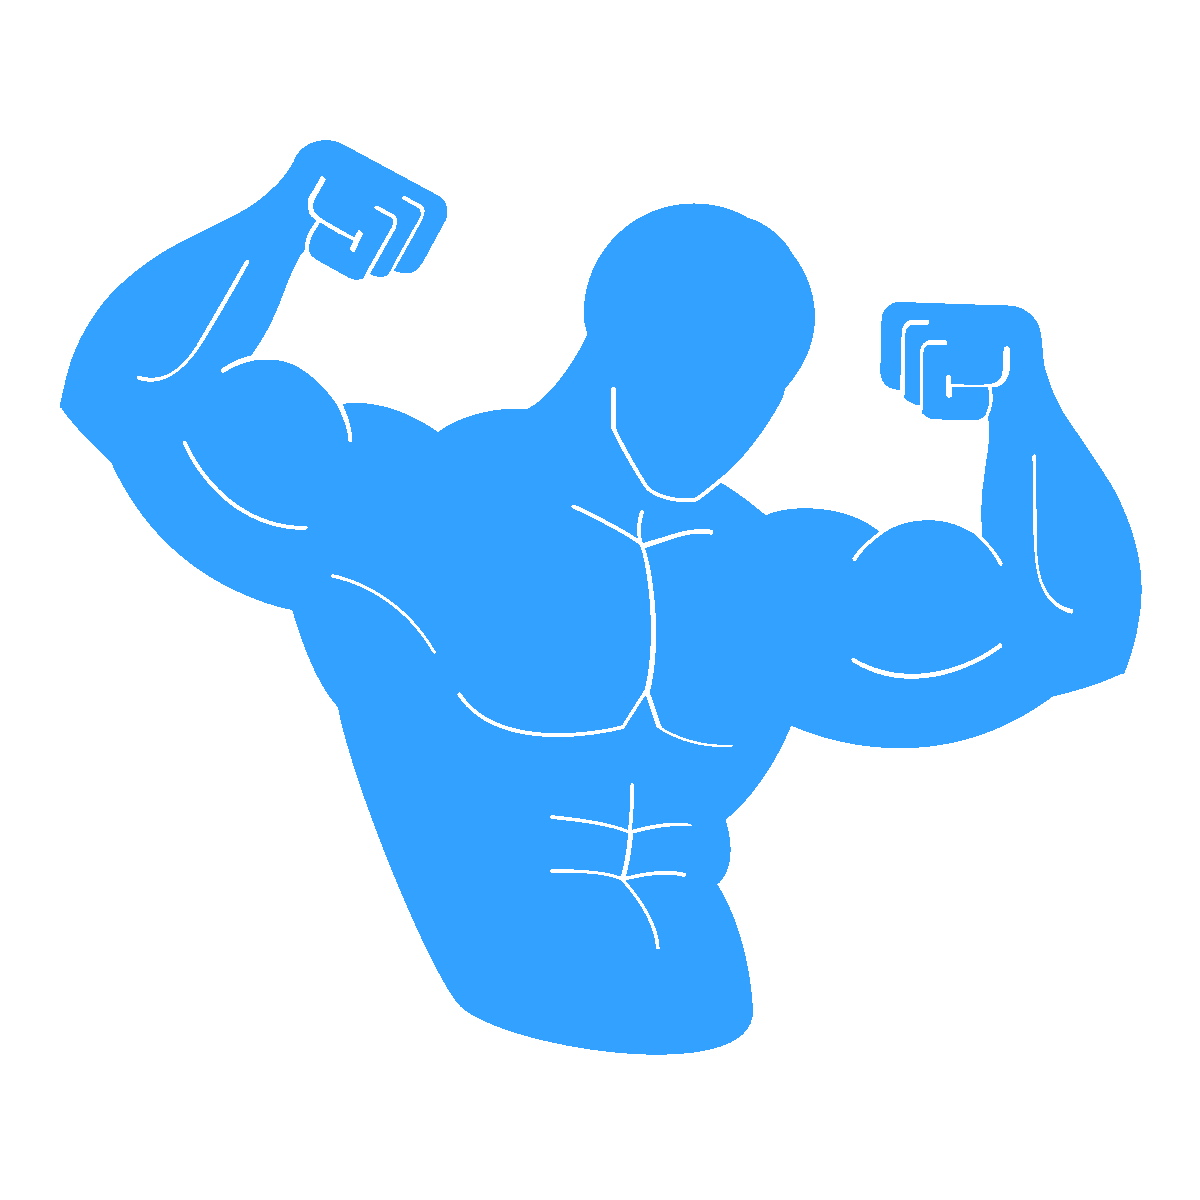 fitness clipart muscular strength